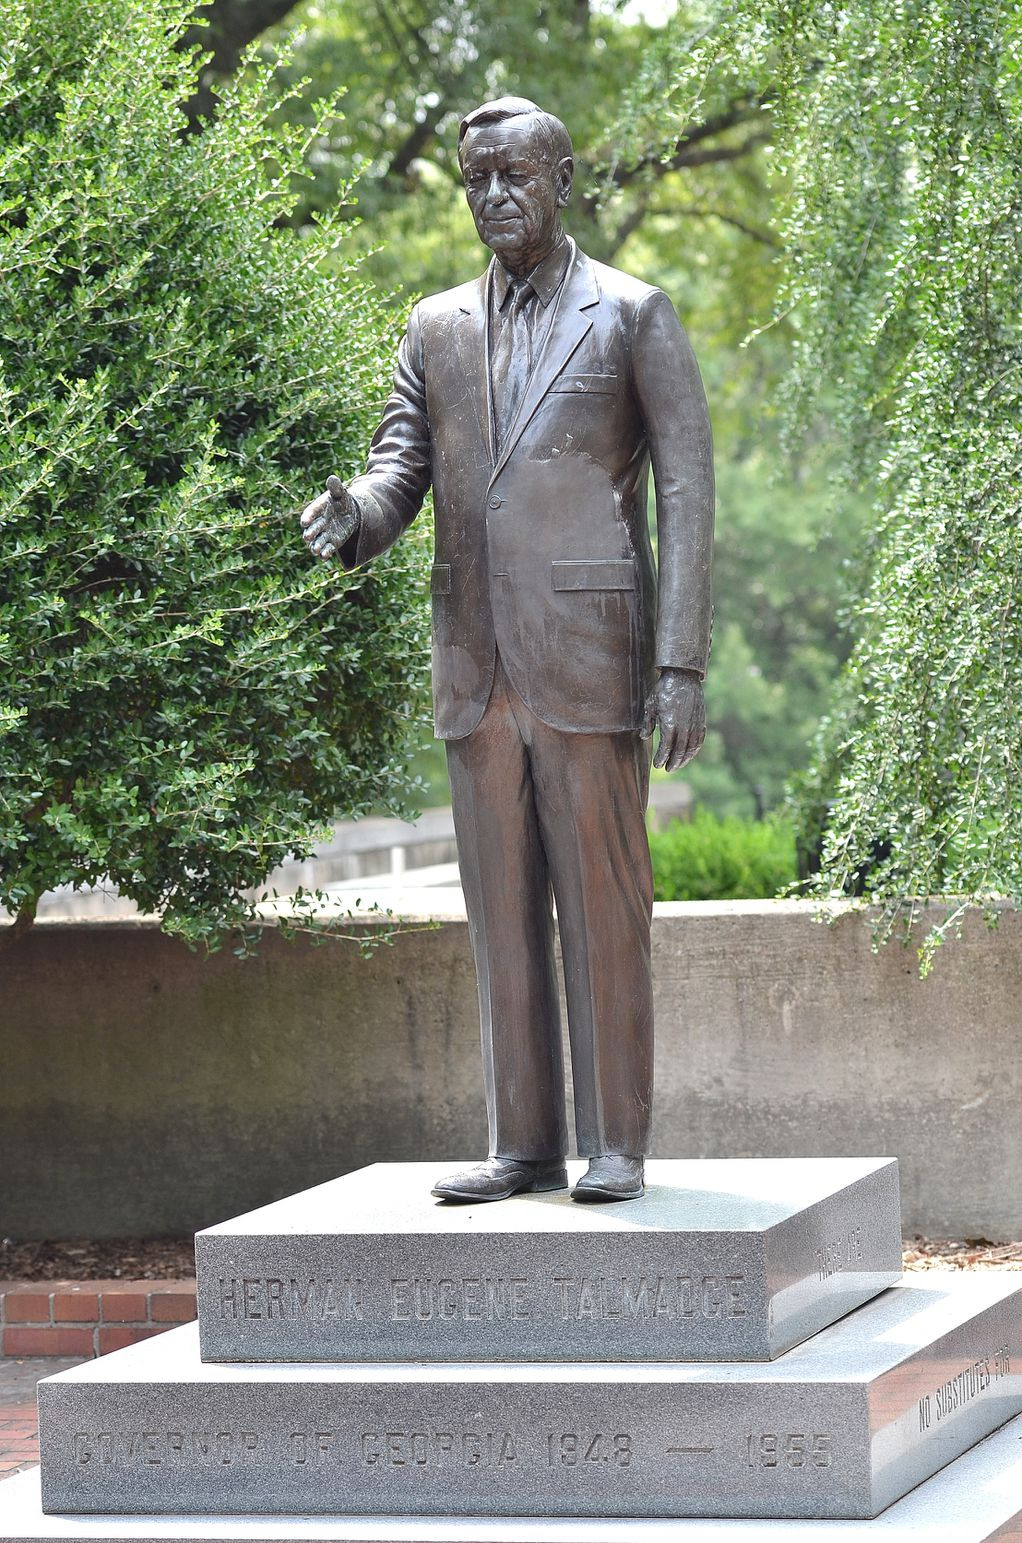 His statue is in Atlanta.